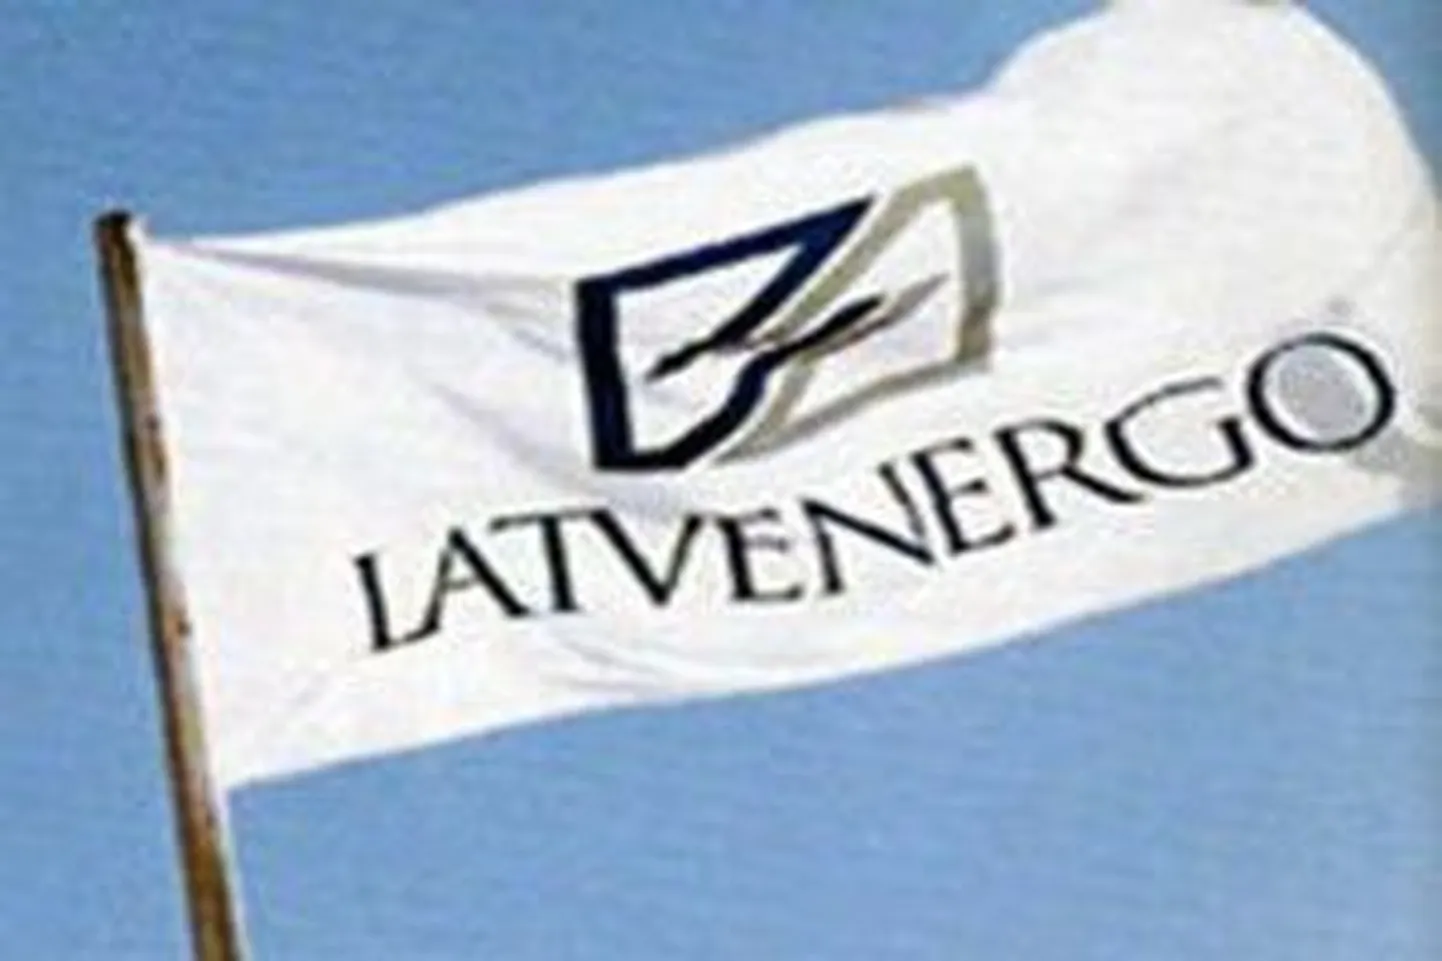 Latvenergo logo.